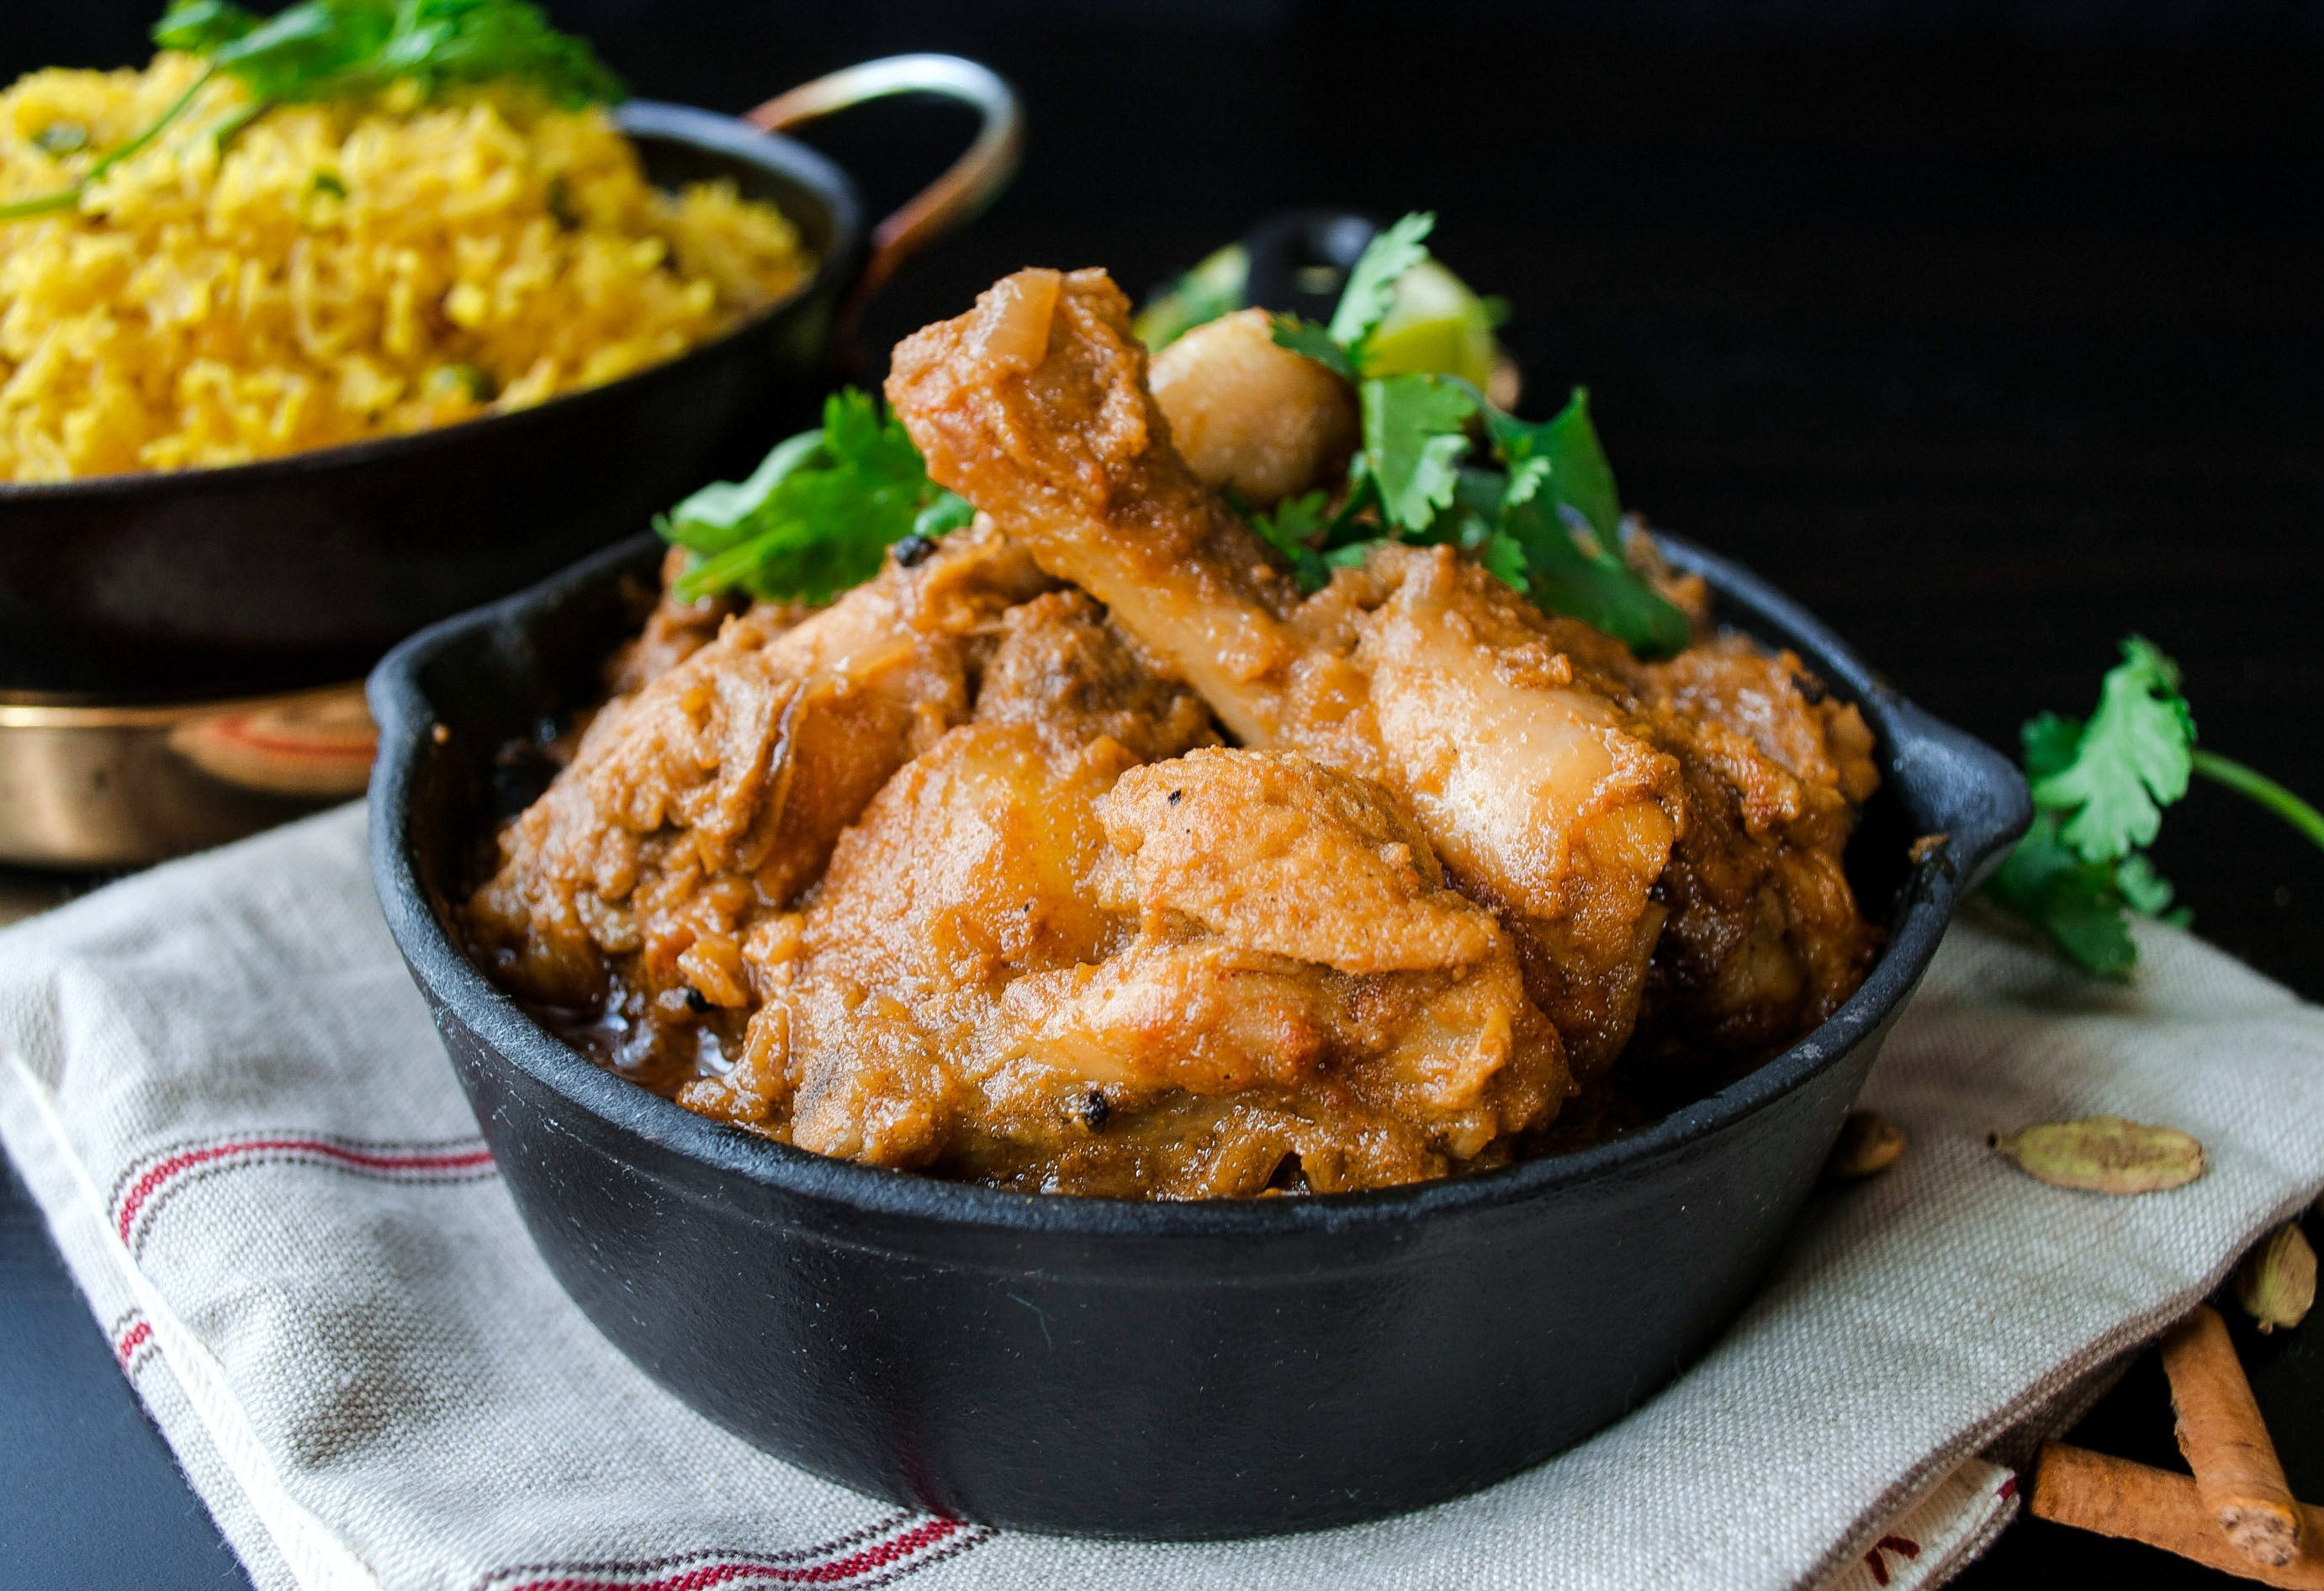 Kosha Chicken or Bengali Bhuna Chicken is a classic Bengali delicacy. 